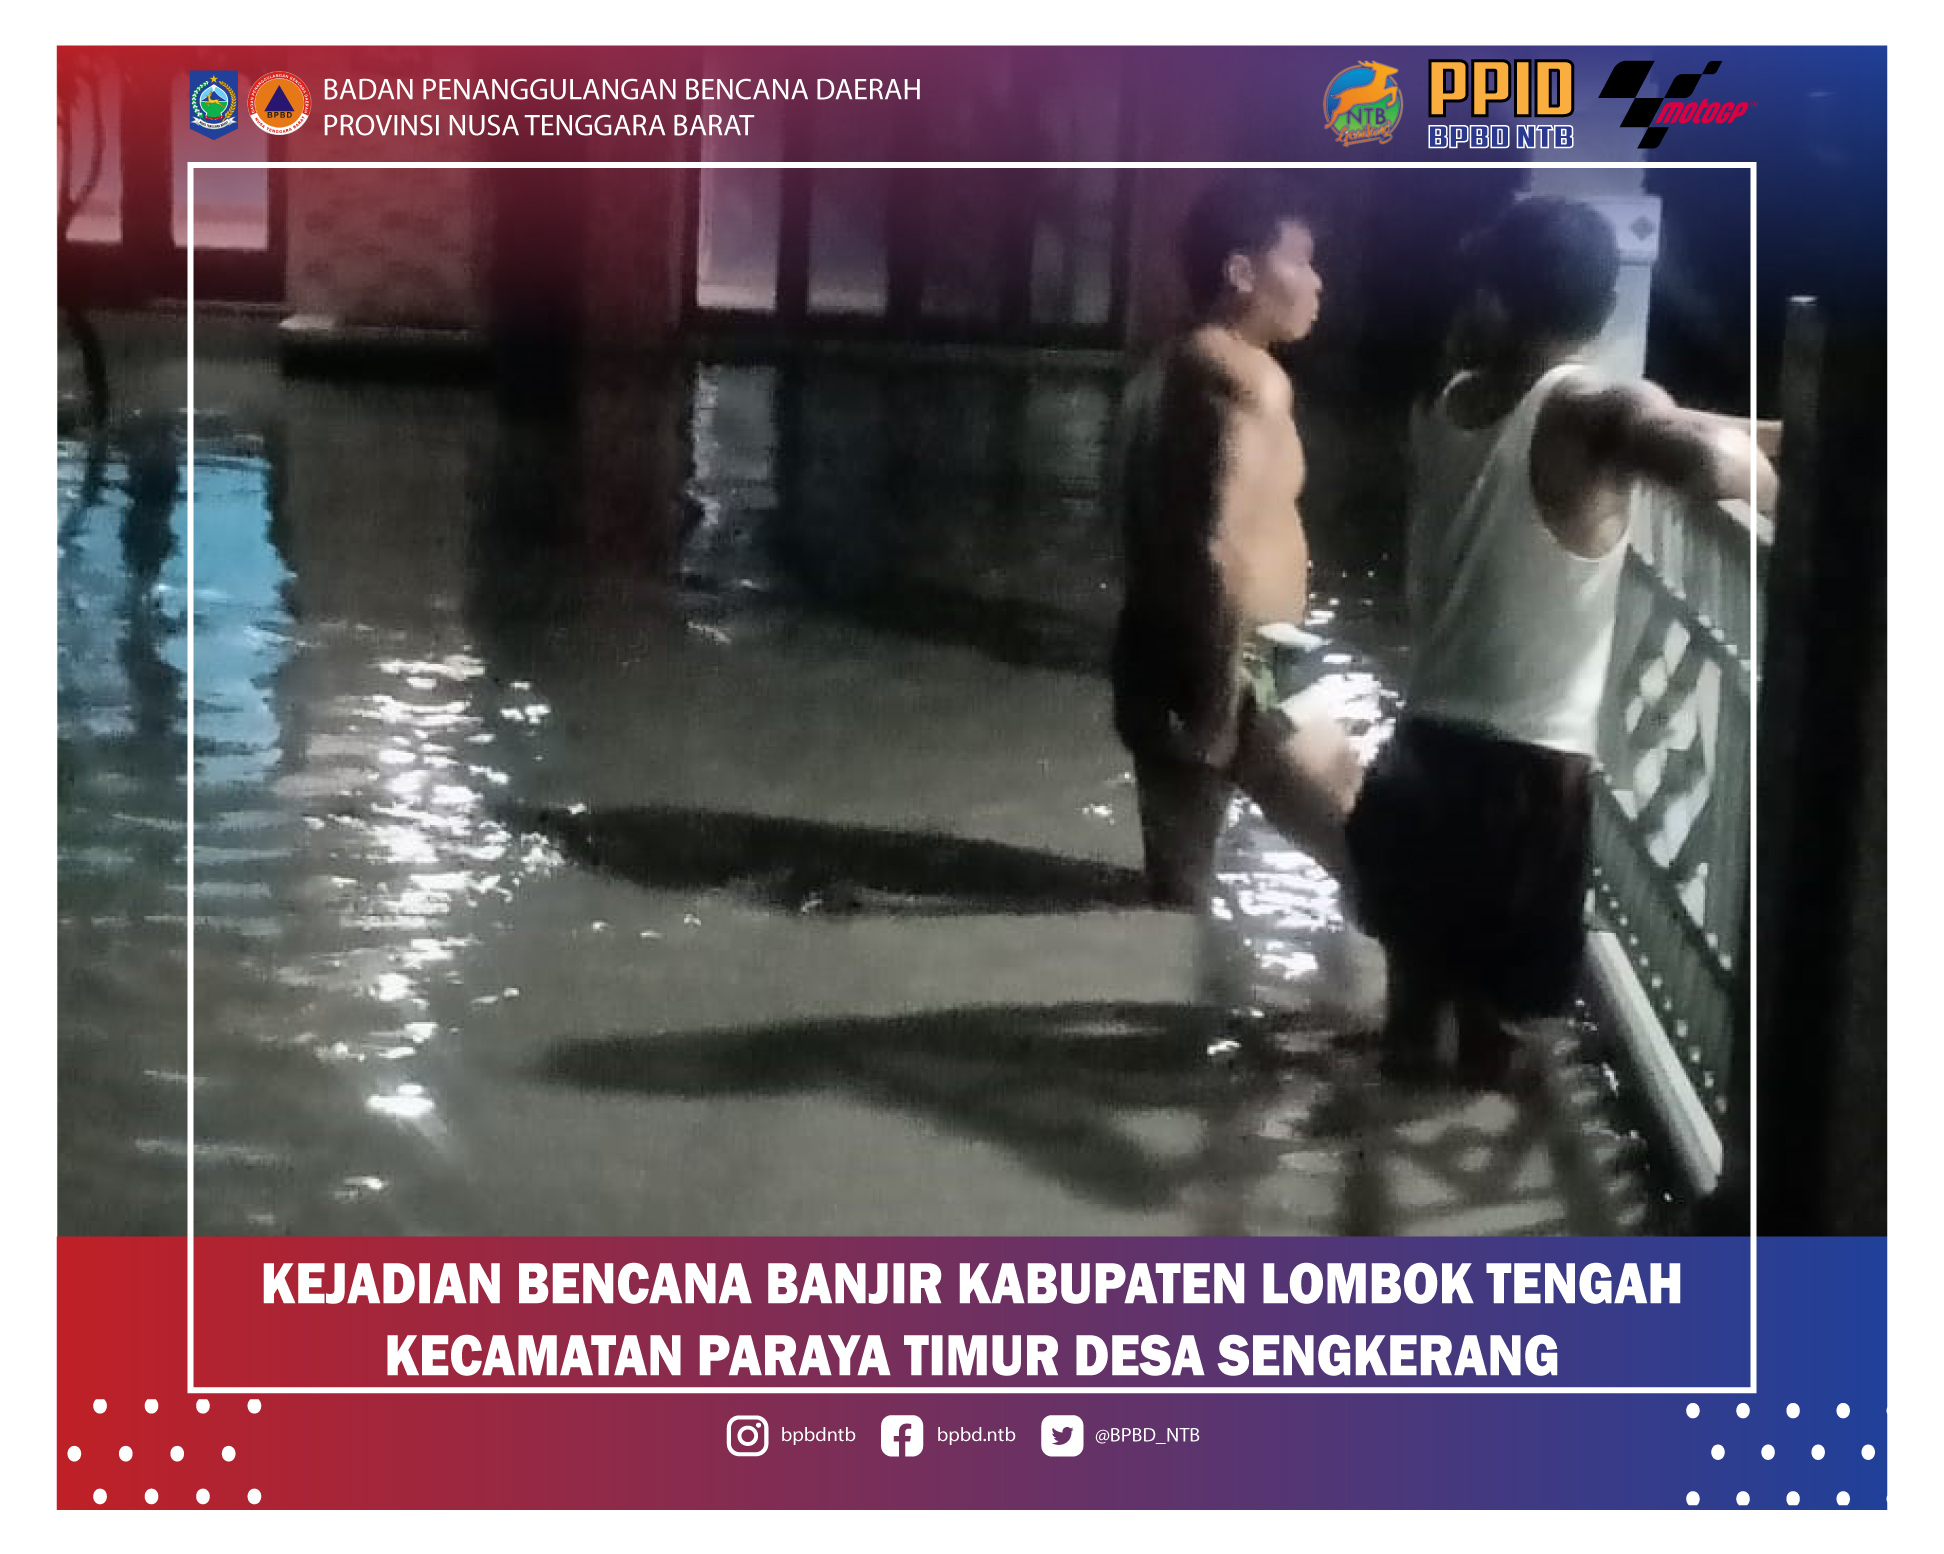 Laporan Kejadian Bencana Banjir Kabupaten Lombok Tengah (Kamis, 02 Desember 2021)